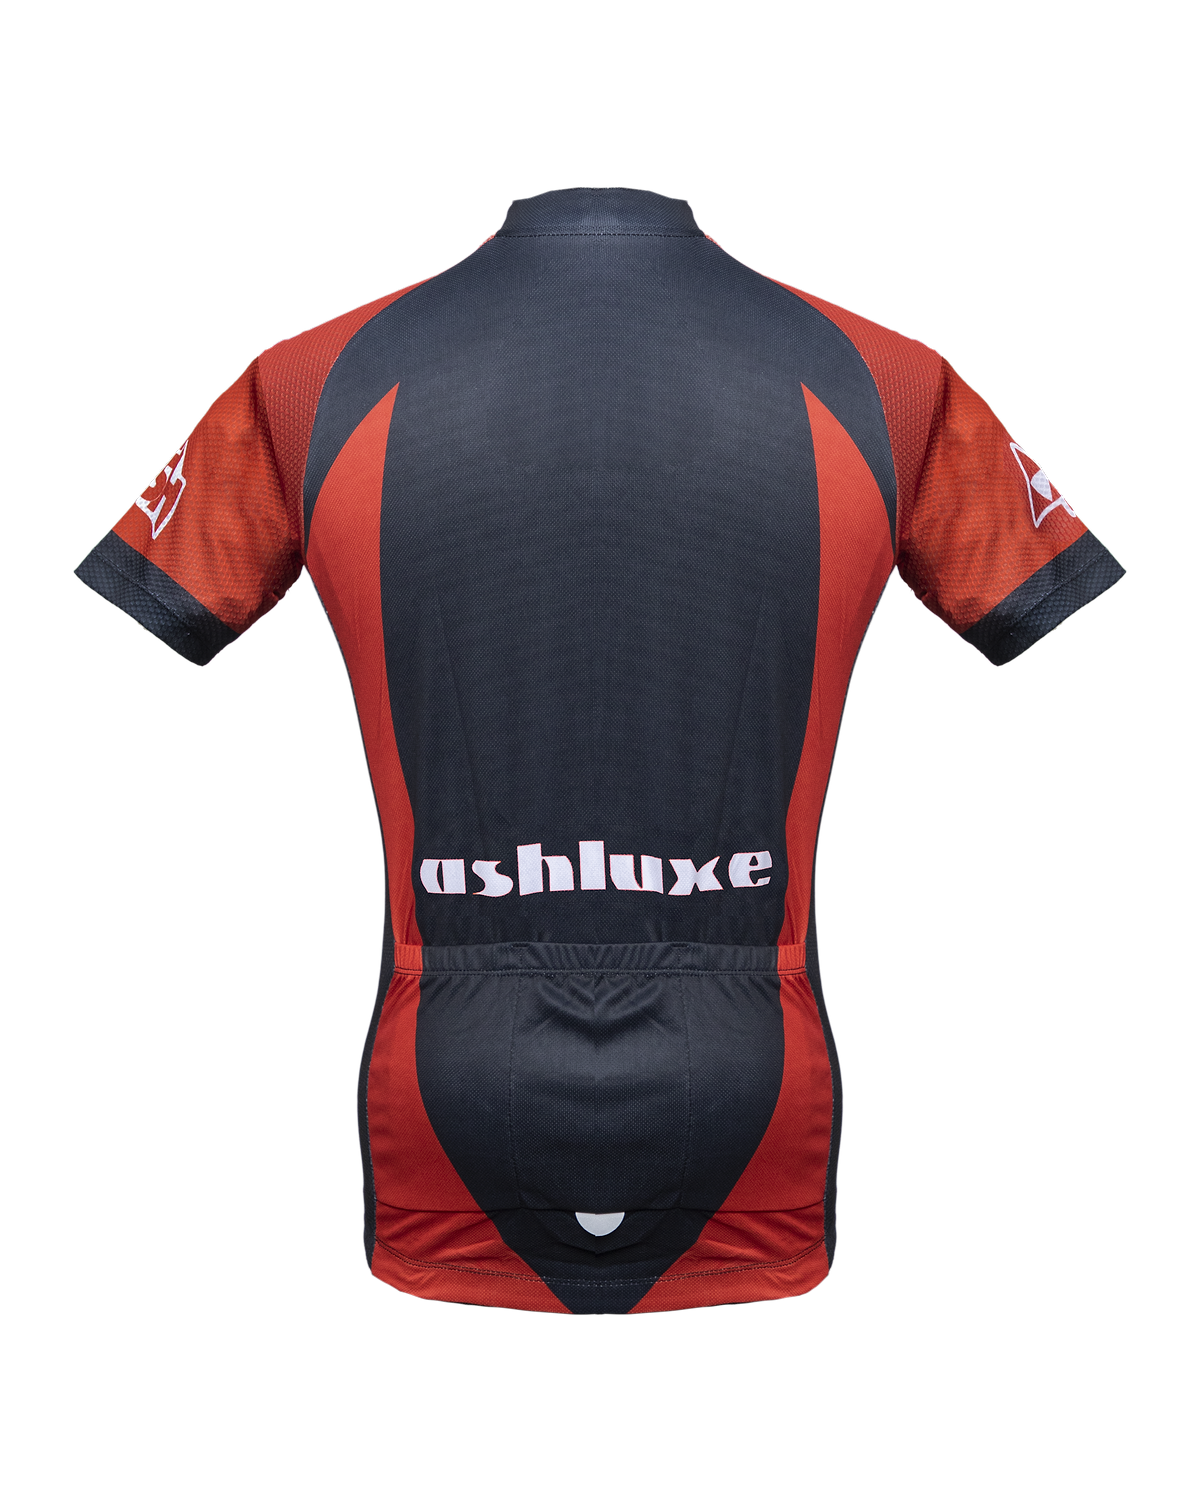 Ashluxe Digital Print Cycling Top